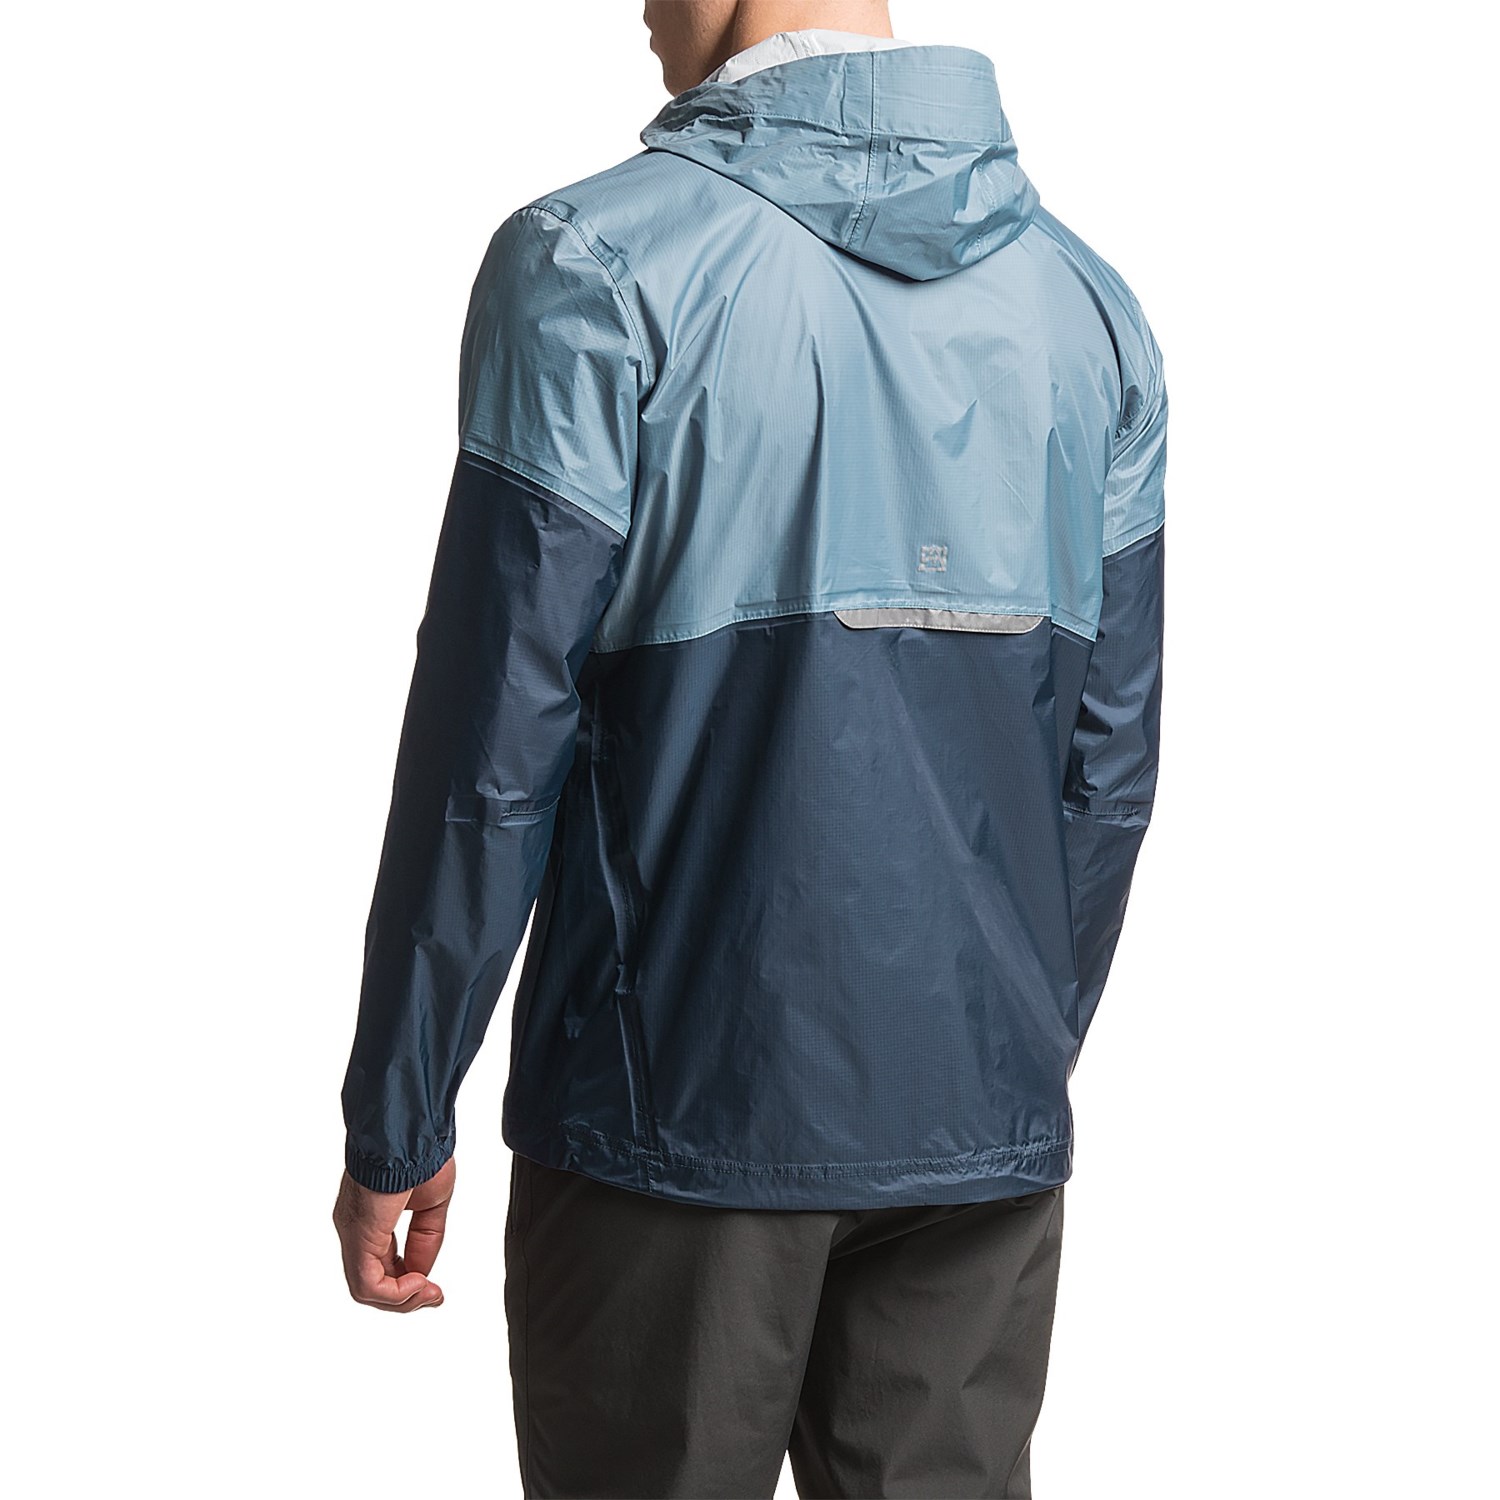 Avalanche Wear El Portal Rain Jacket (For Men) - Save 41%